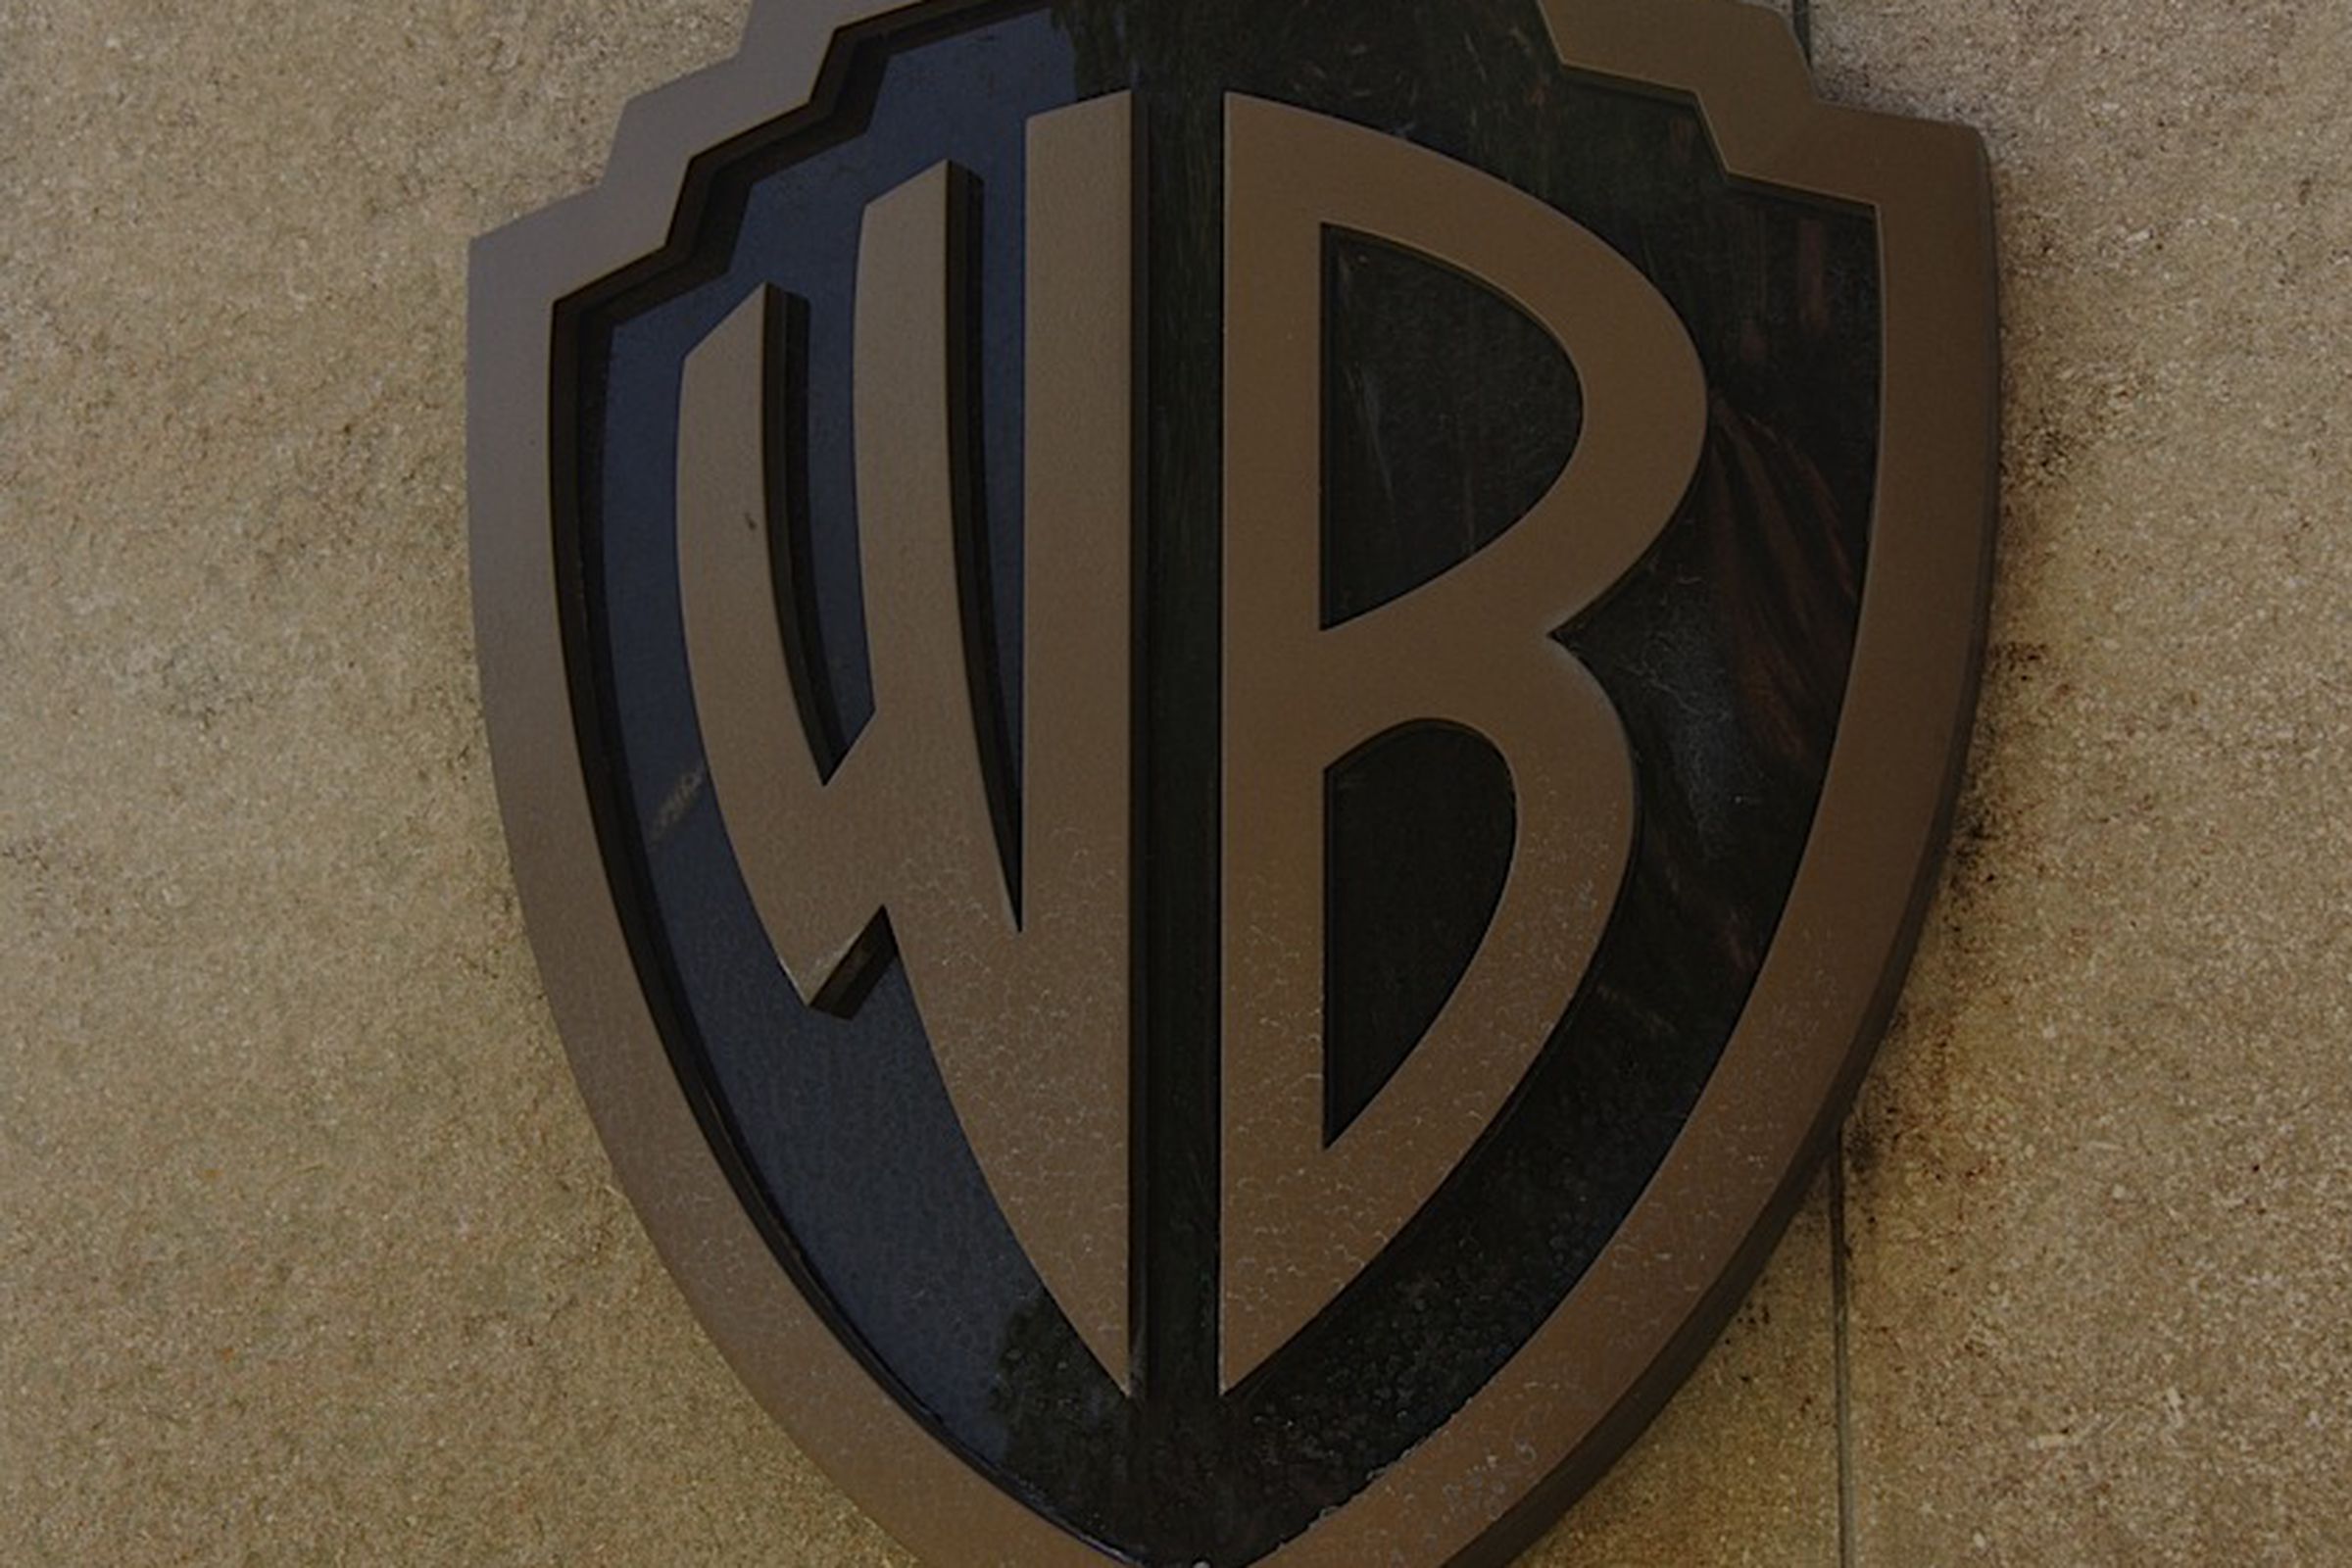 Warner Bros studio logo